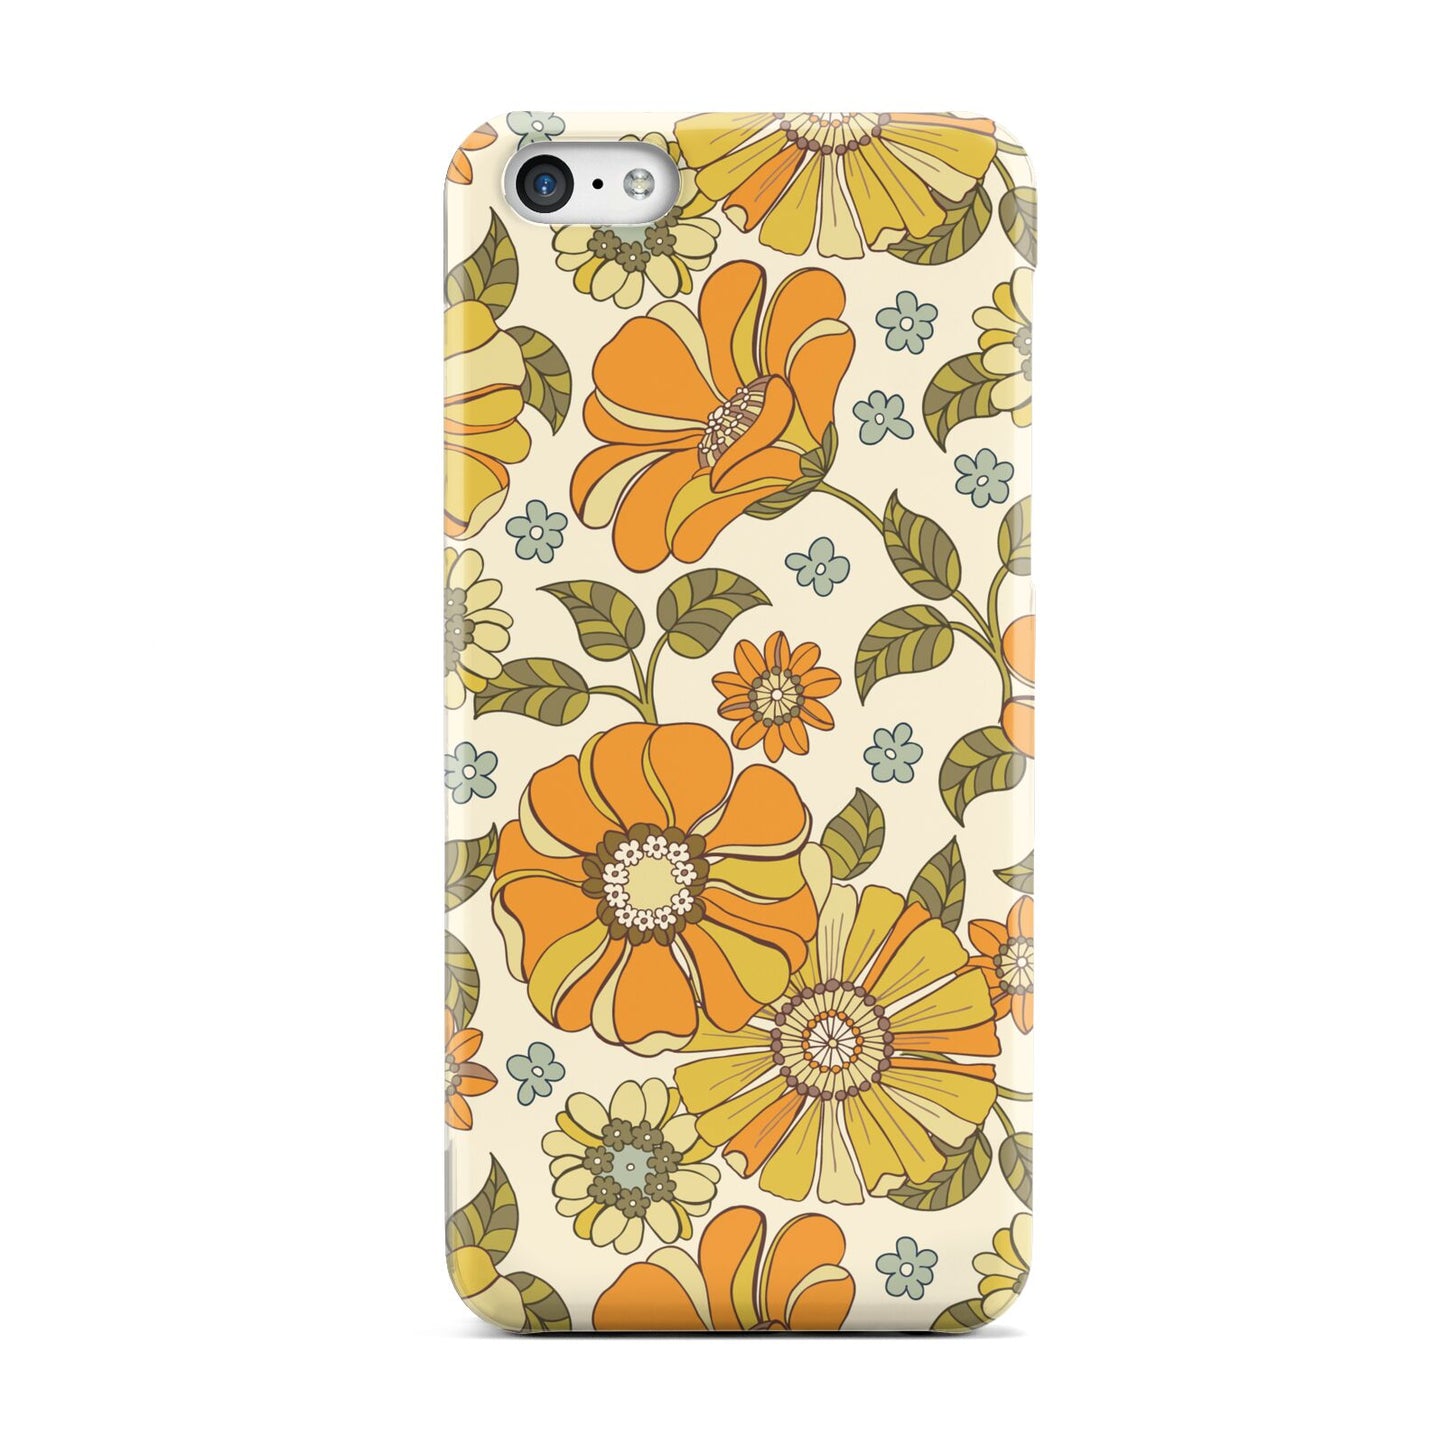 Vintage Floral Apple iPhone 5c Case